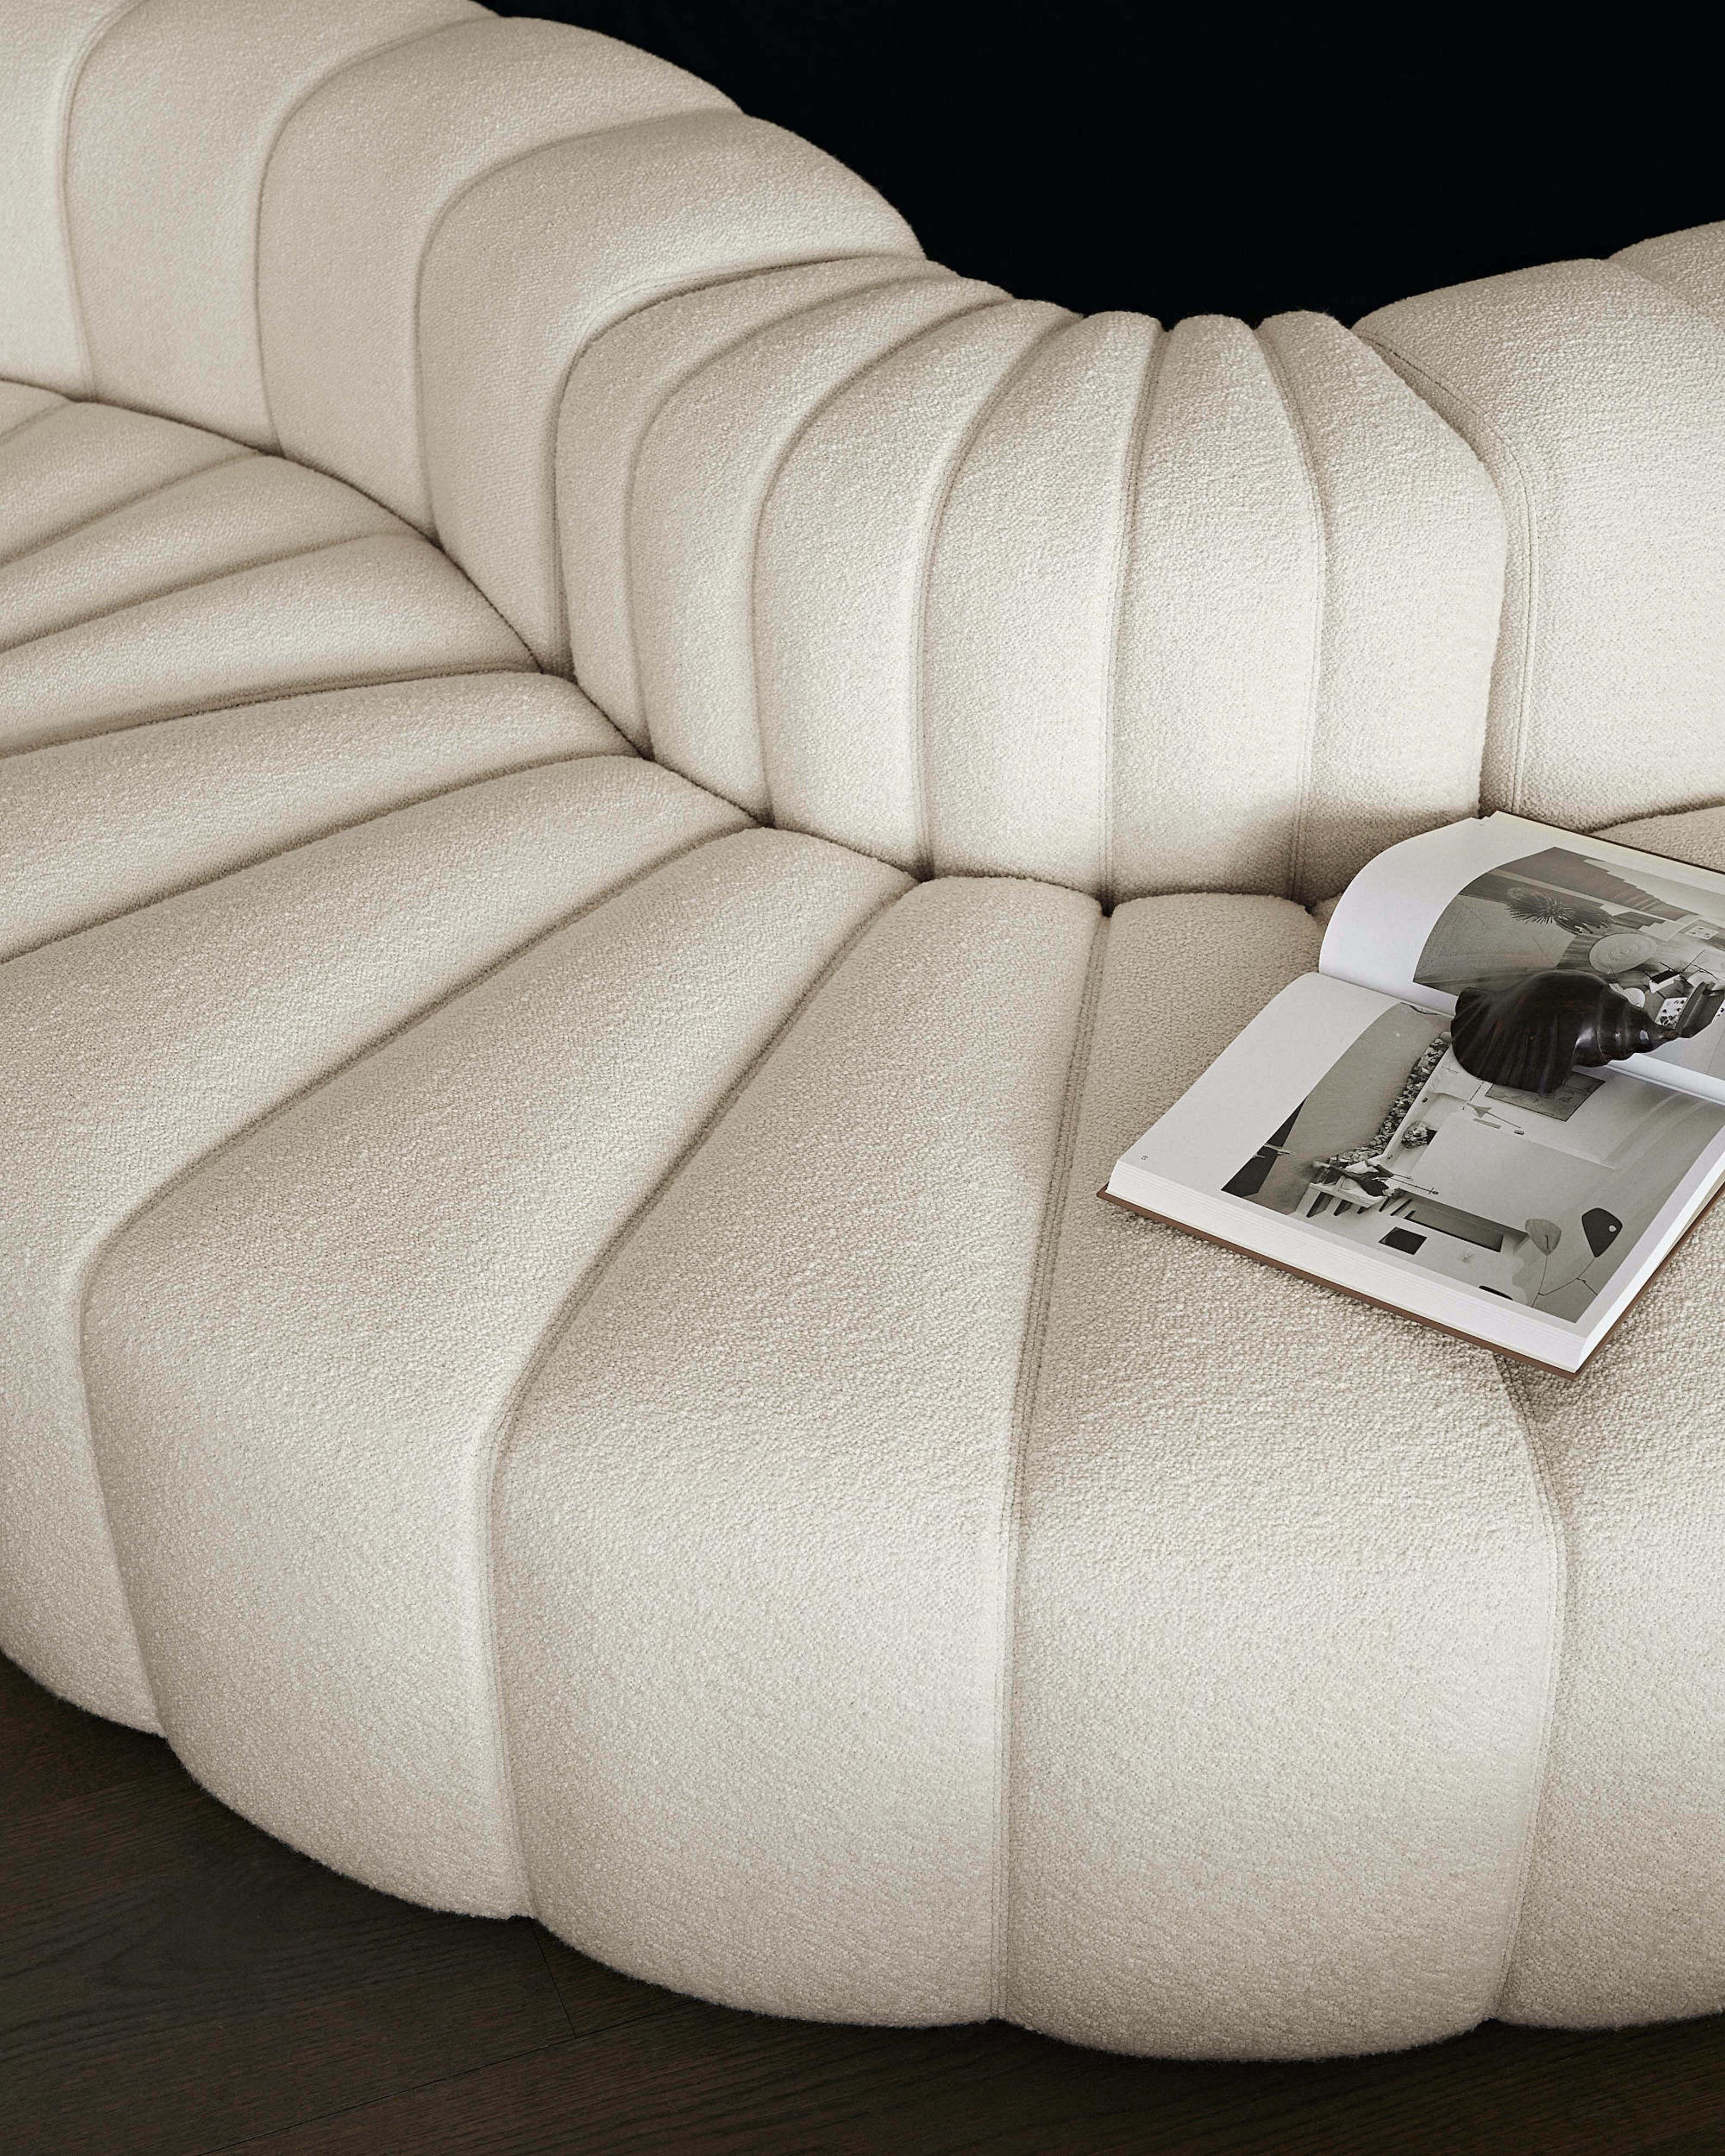 Danois Studio' Sofa by Norr11, Canapé modulaire, Setup 6, Whisper (Outdoor) en vente